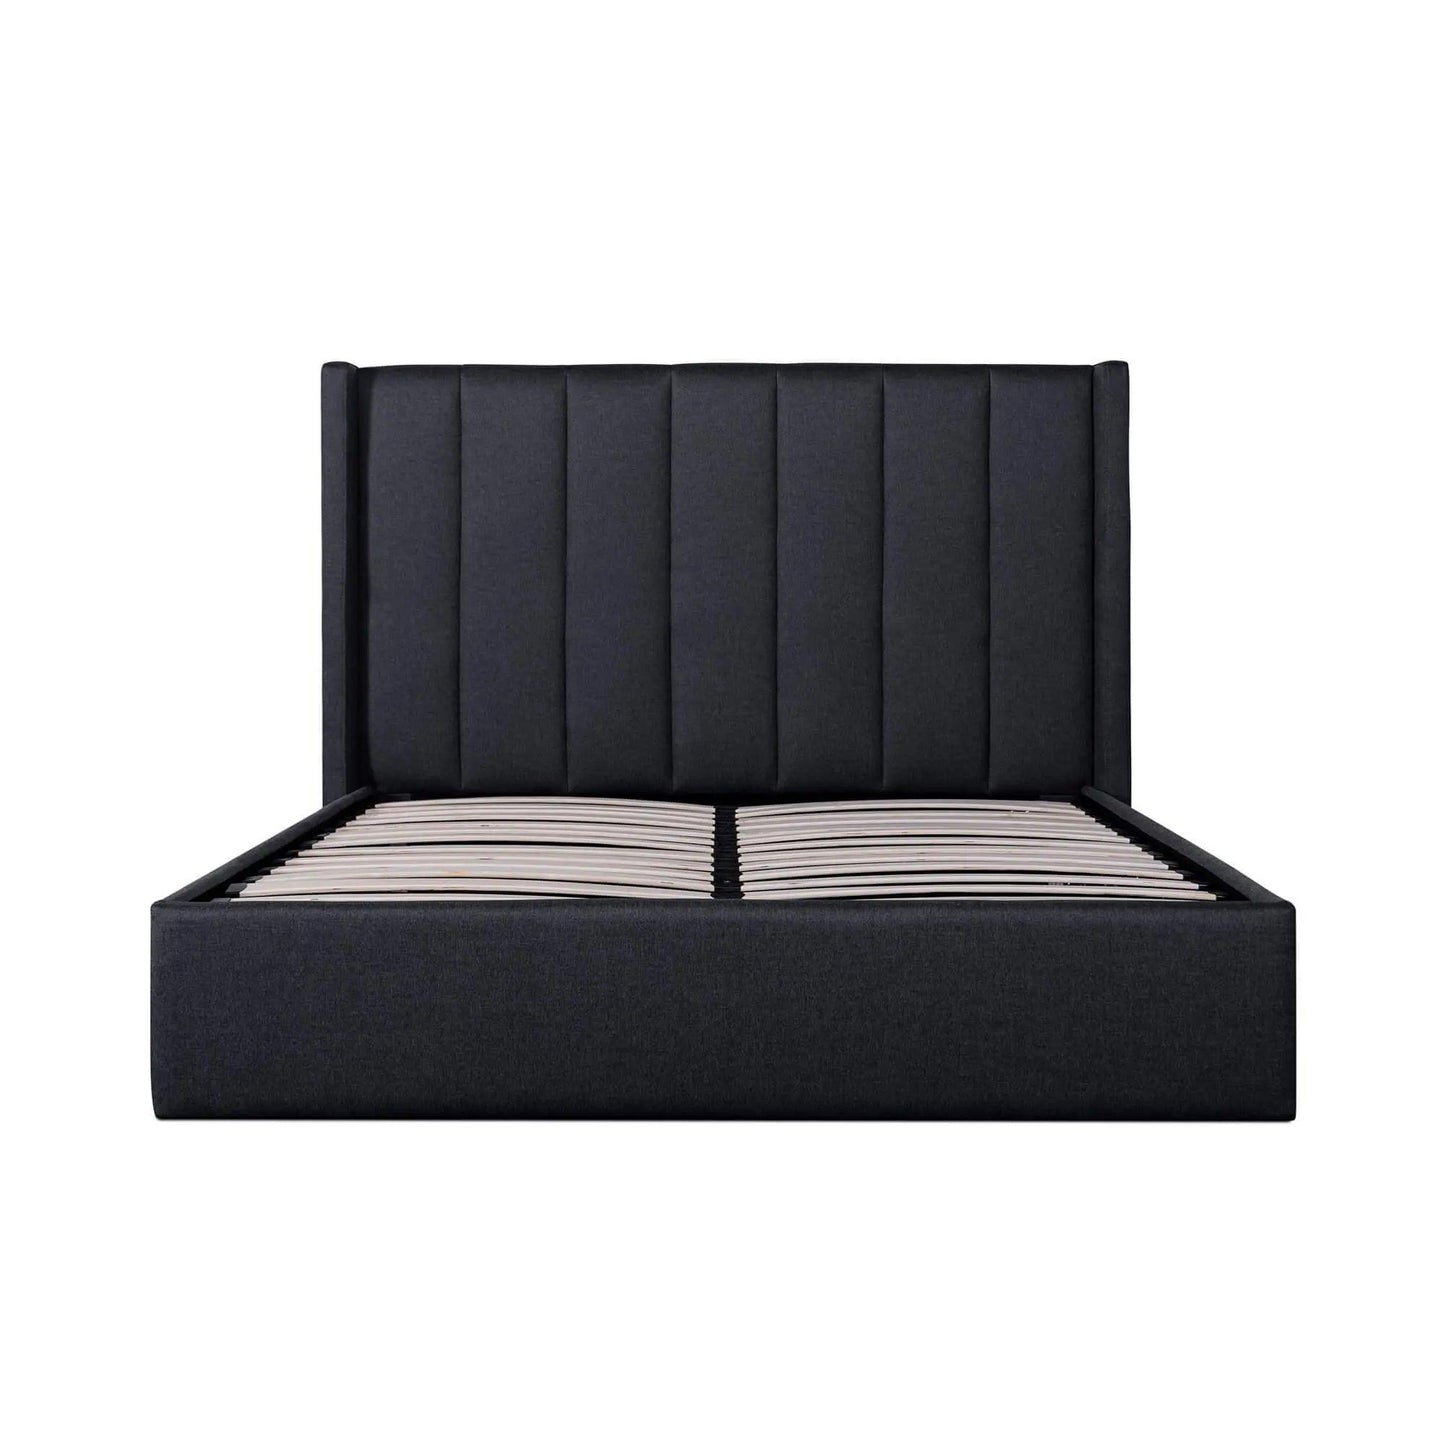 Calibre Fabric King Bed in Charcoal Grey with Storage BD6021-YO - BedsBD6021-YO 1